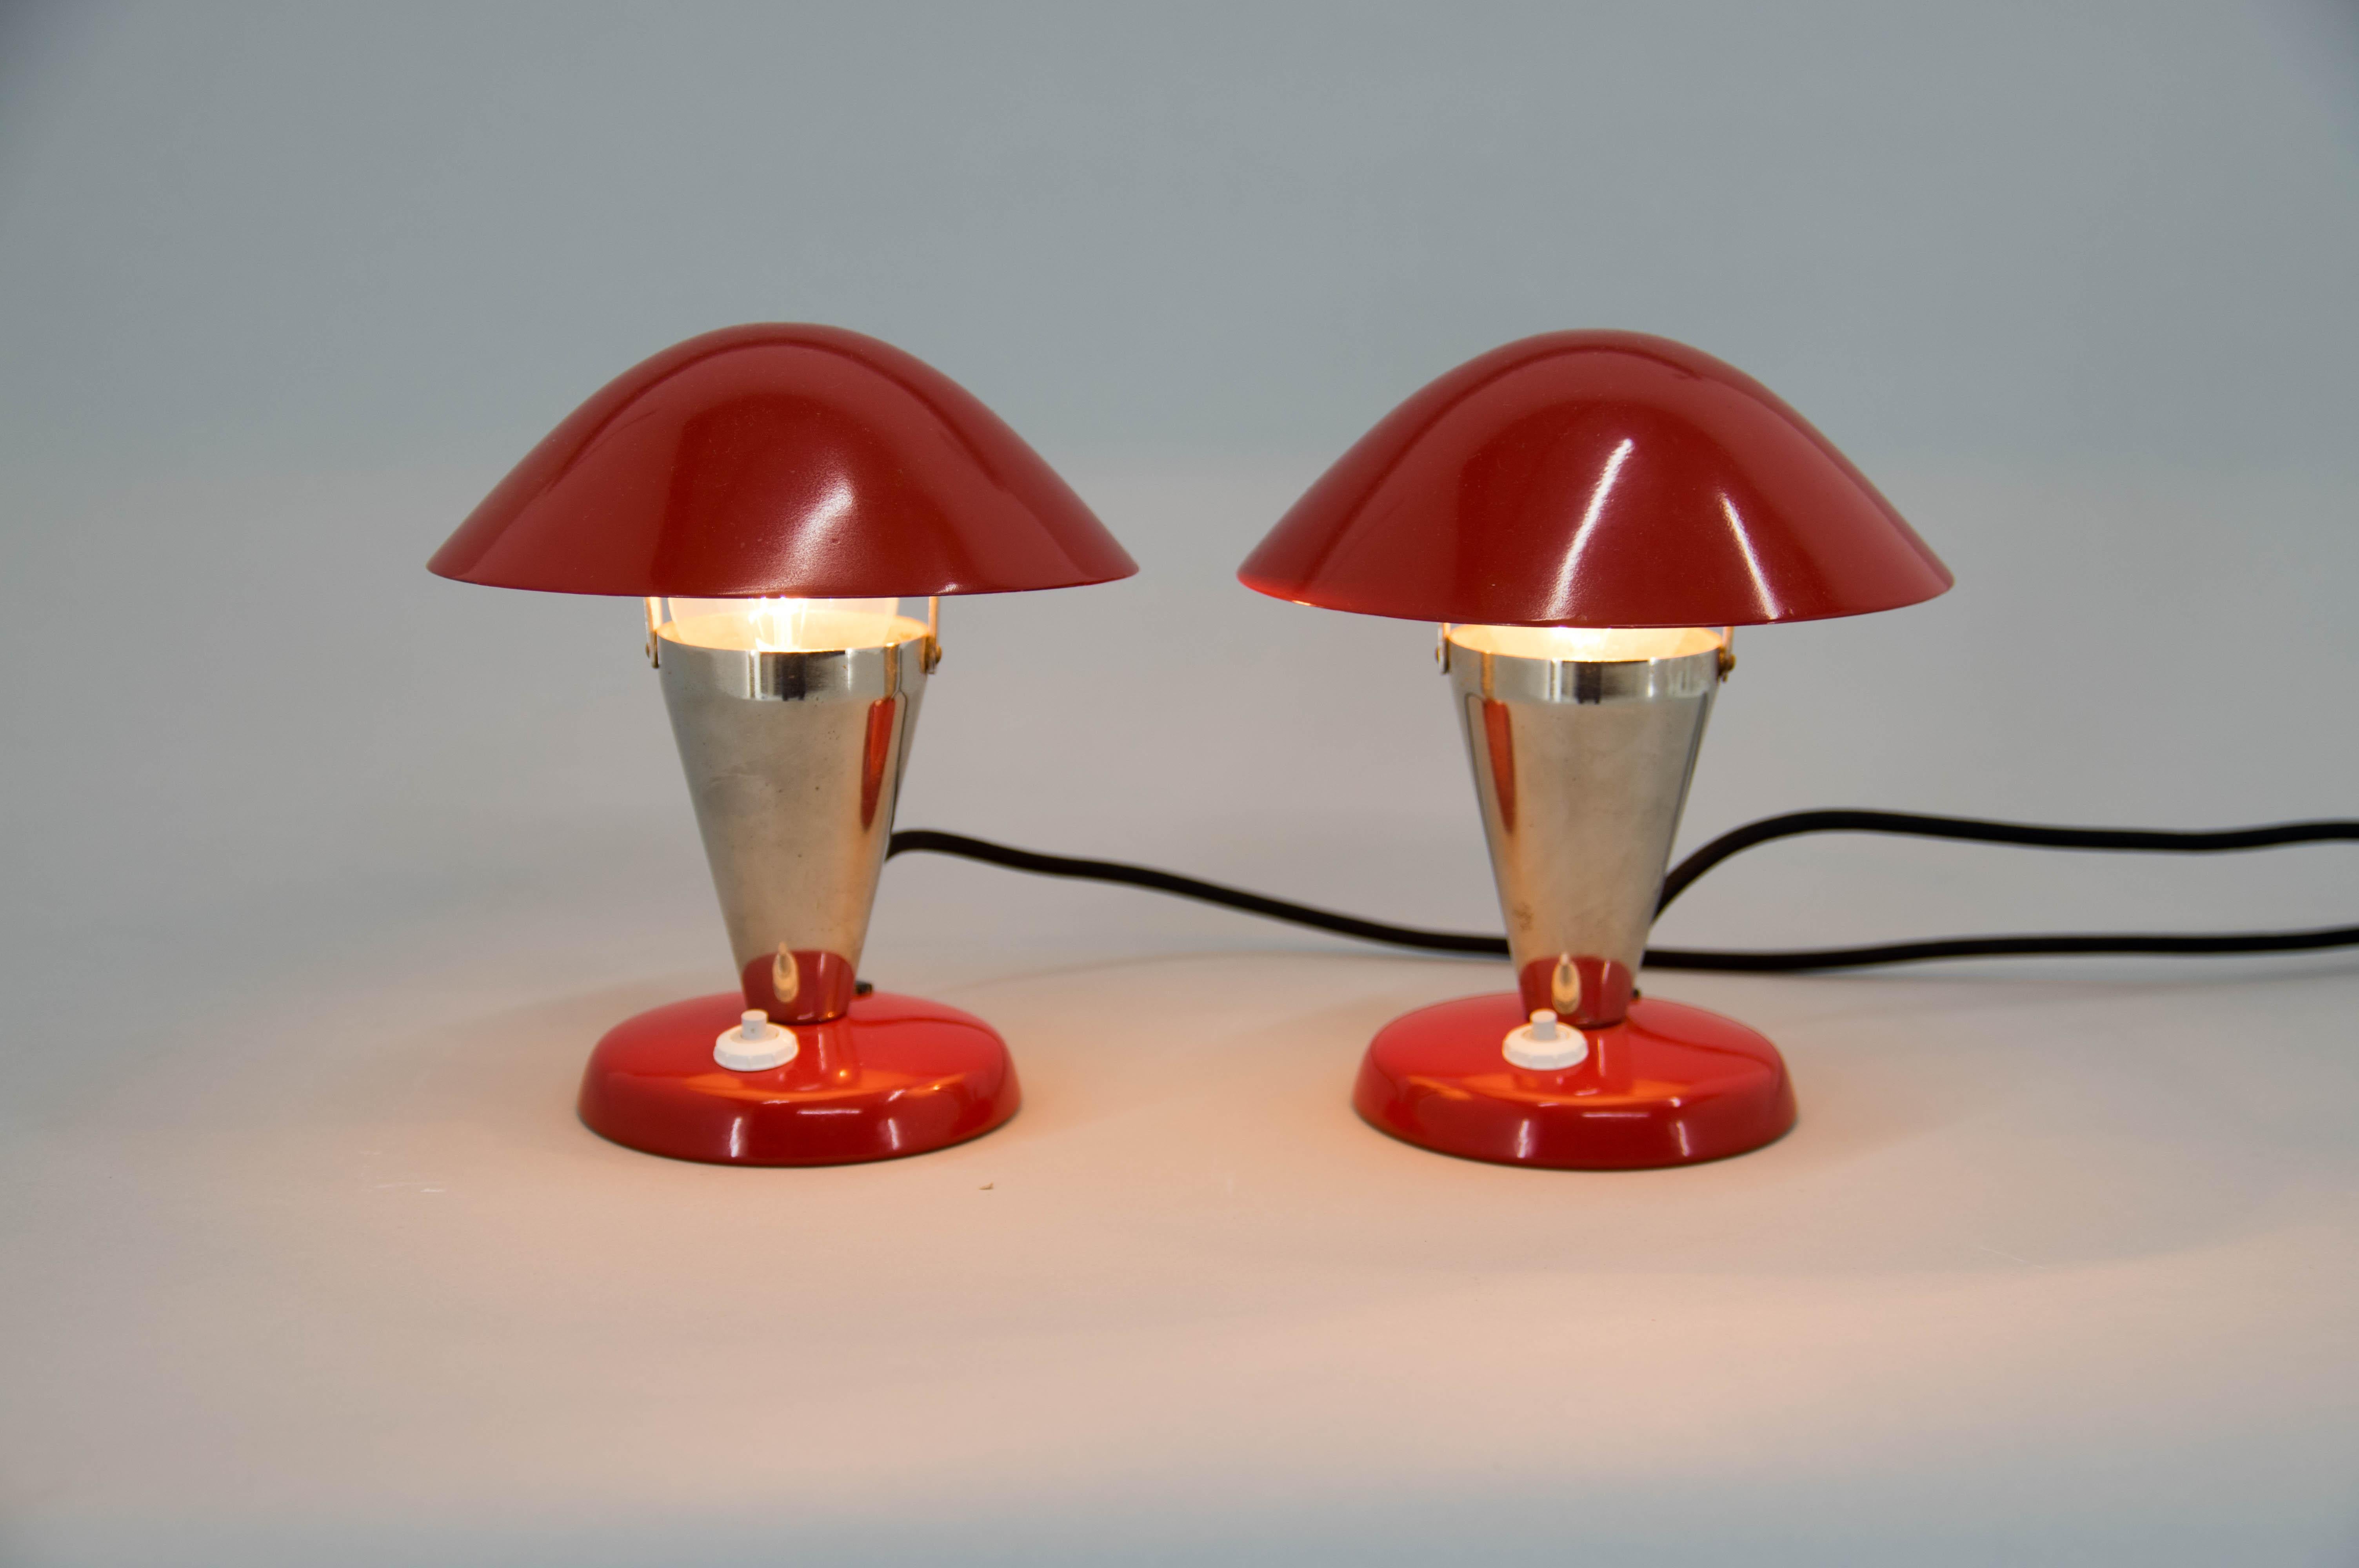 Restauriert: neue rote Farbe, poliert, neu verkabelt.
1x40W, E25-E27 Glühbirne.
Inklusive US-Steckeradapter.